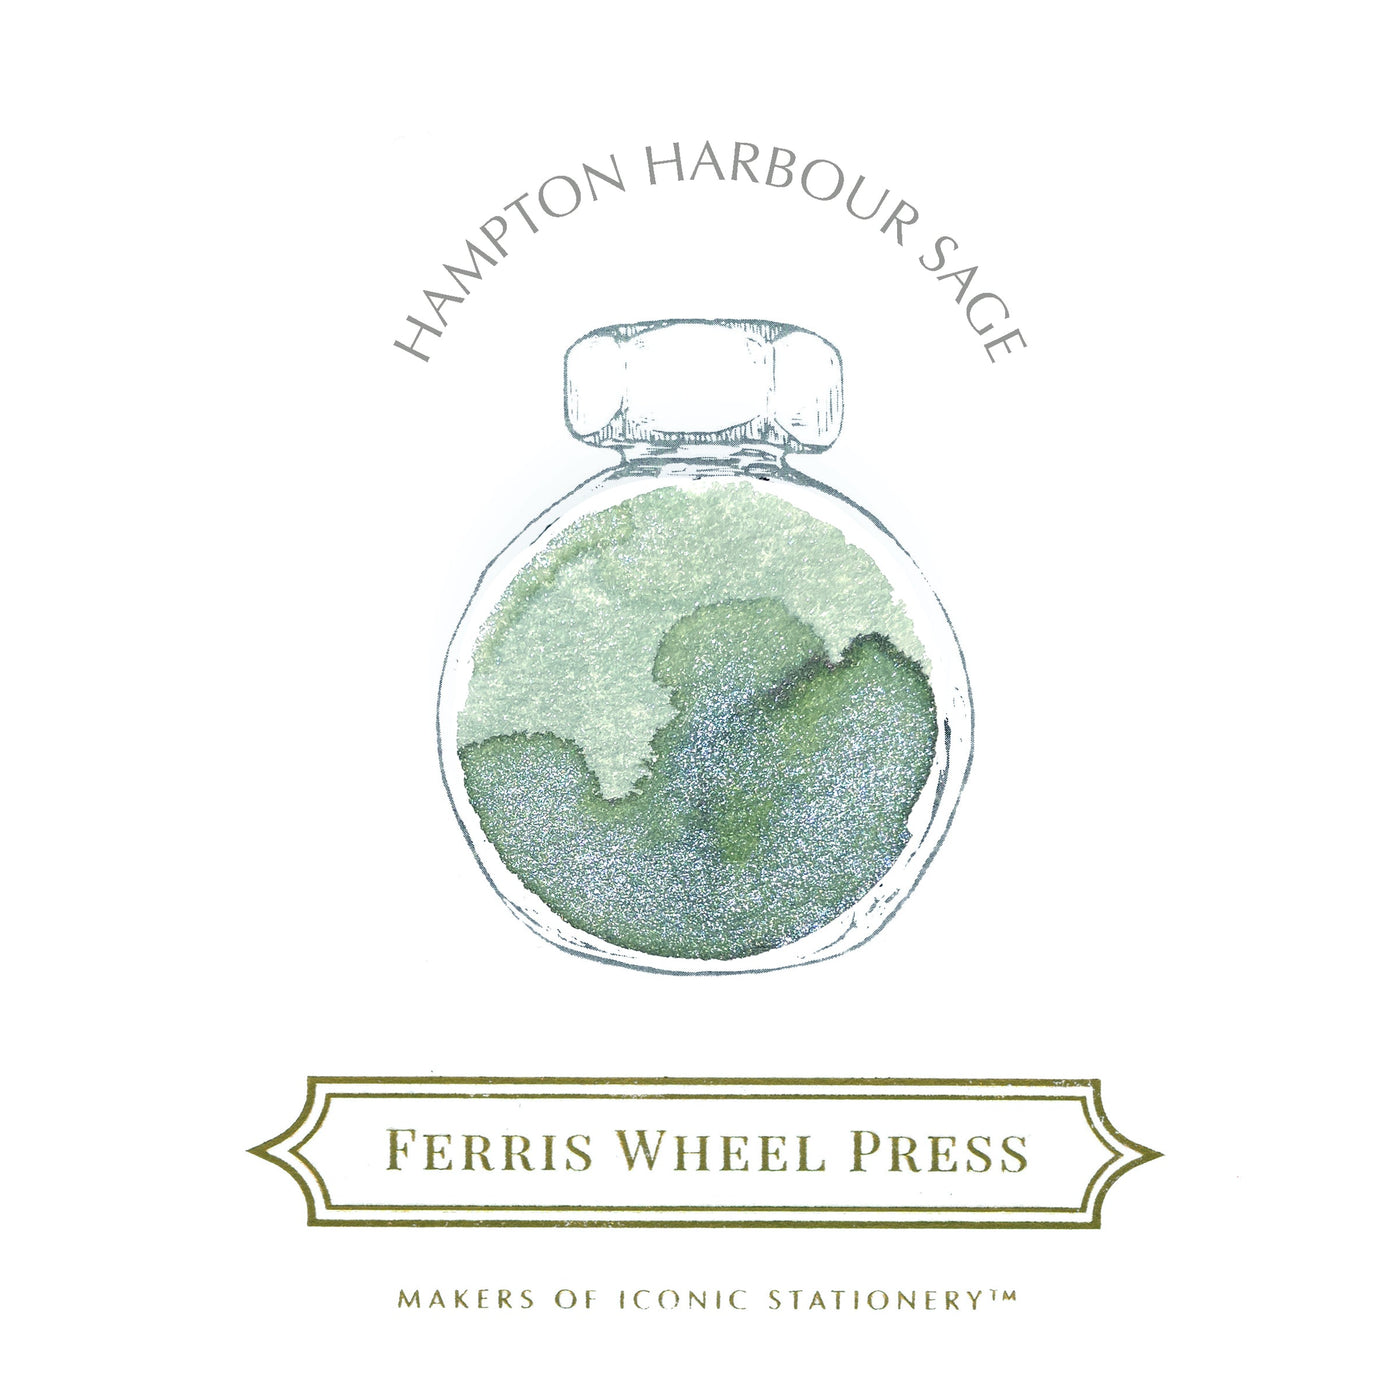 Ferris Wheel Press Hampton Harbour - 38ml bottled Ink